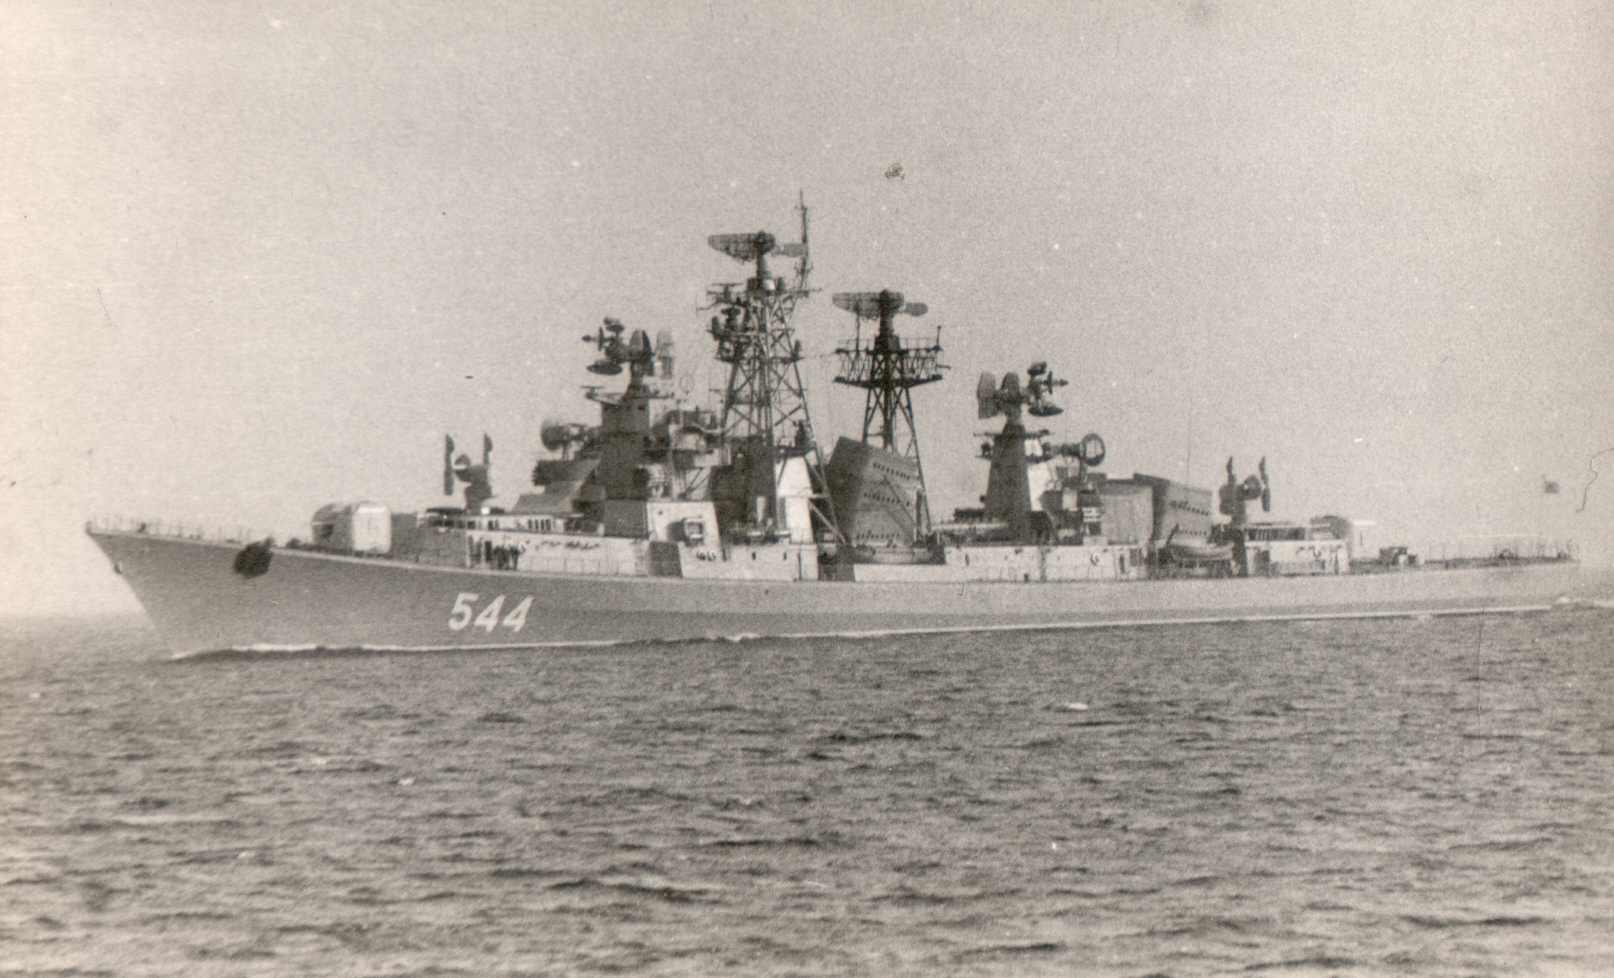 Ognevoy (544) 1968 at sea.jpg